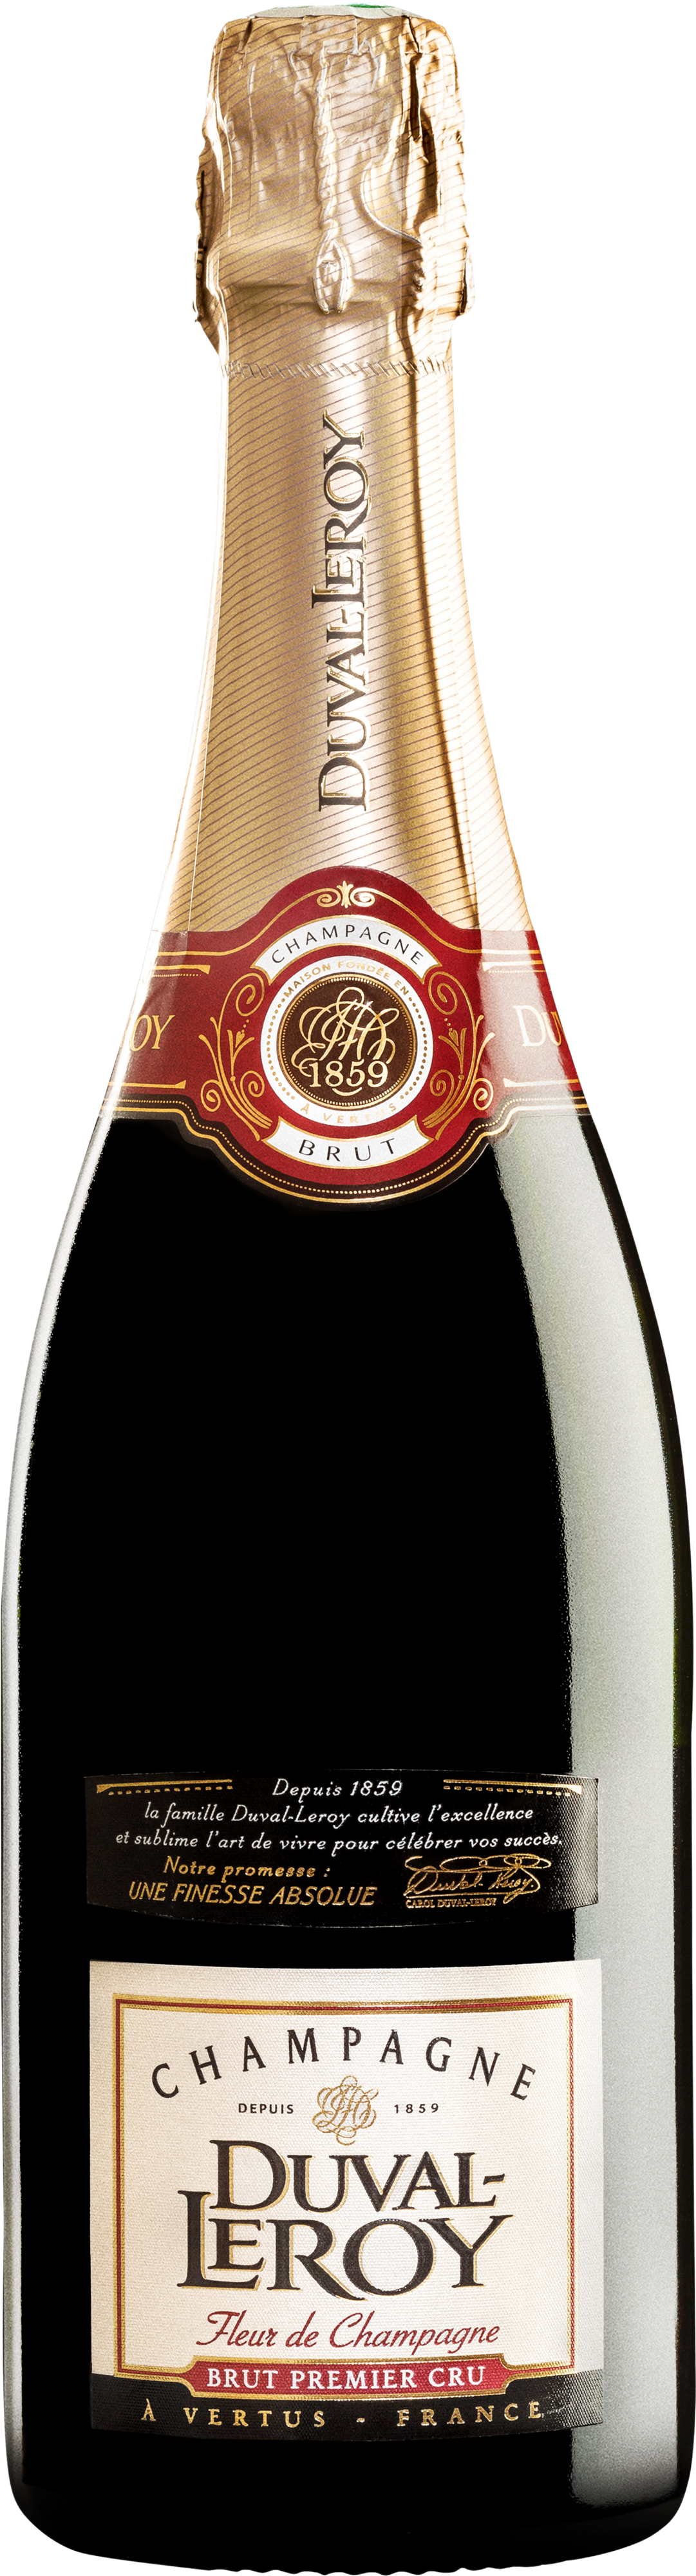 Champagne Duval-Leroy Fleur de Champagne Premier Cru 750ml bottle